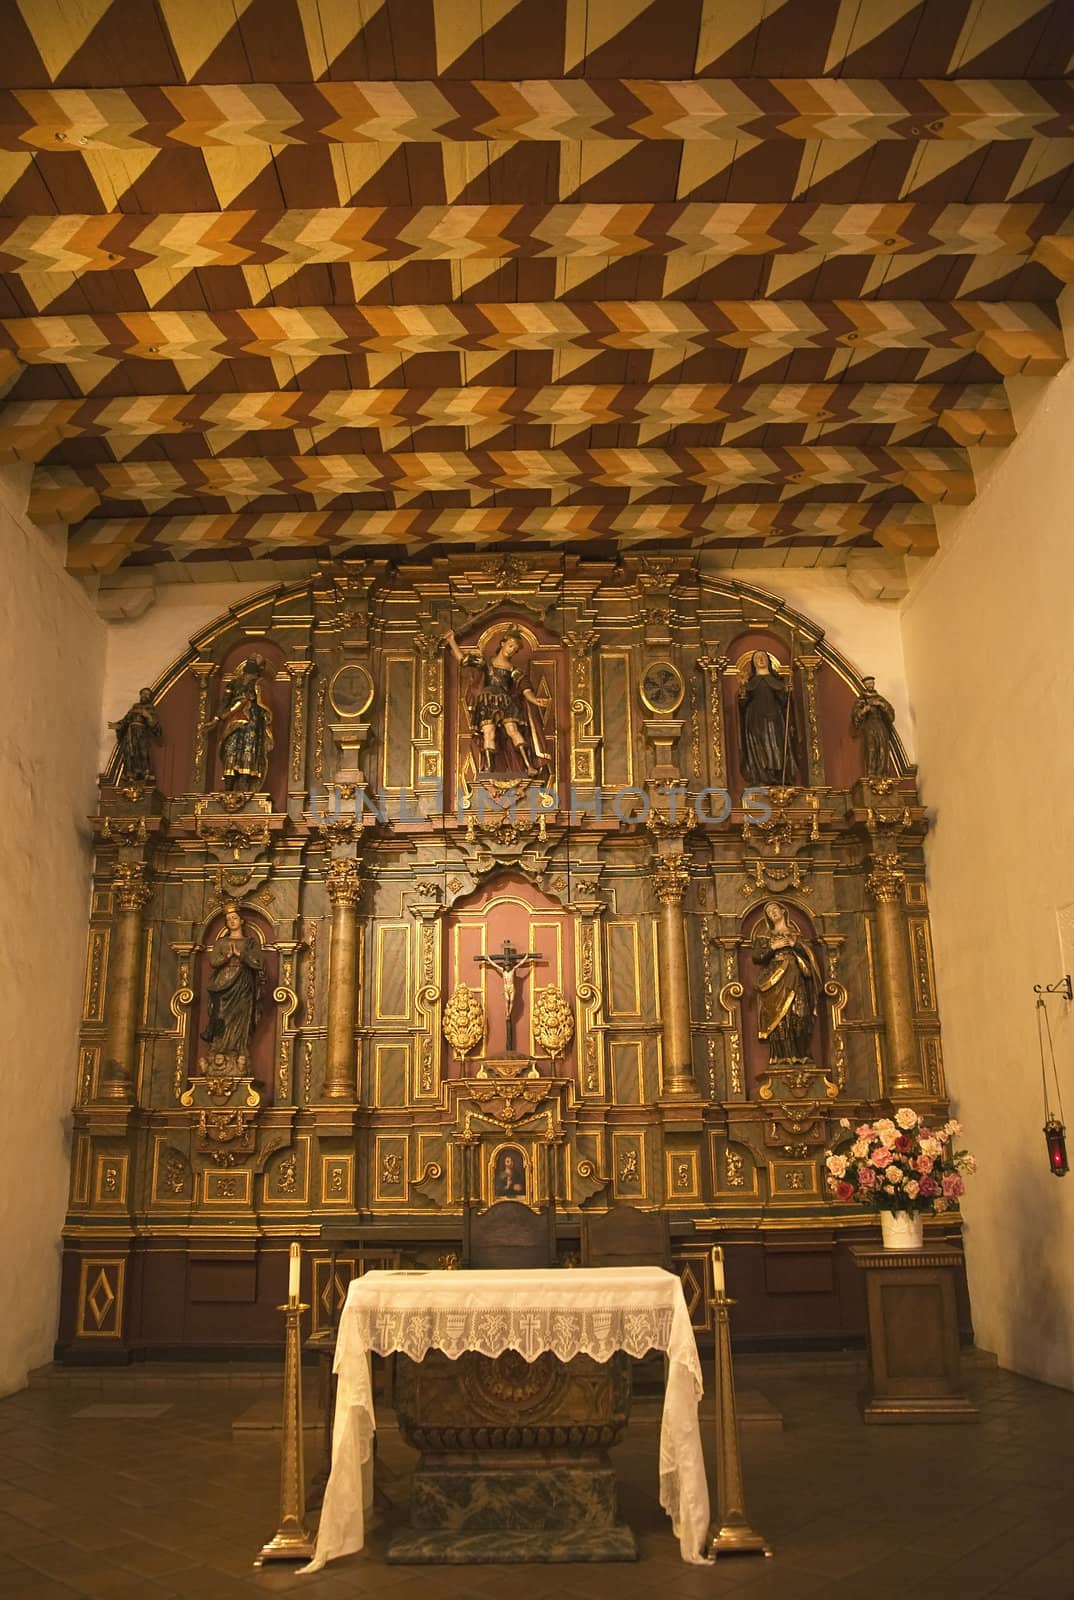 Chapel Interior Mission Dolores Saint Francis de Assis San Francisco California by bill_perry